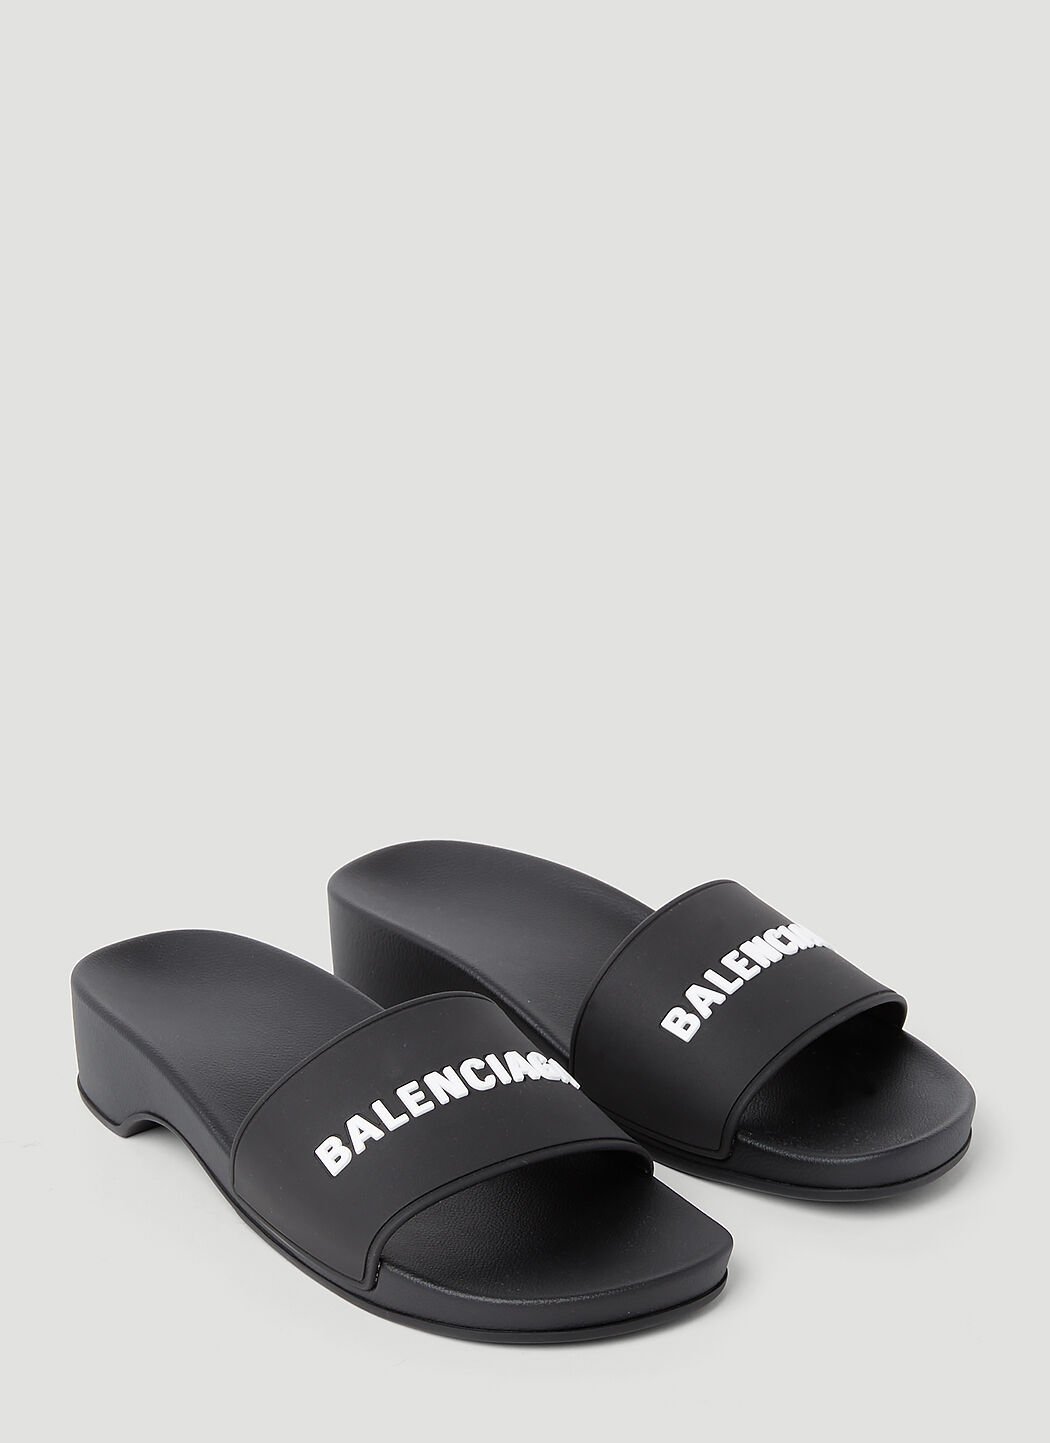 Balenciaga Black Rubber Pool Slides Size 12  eBay